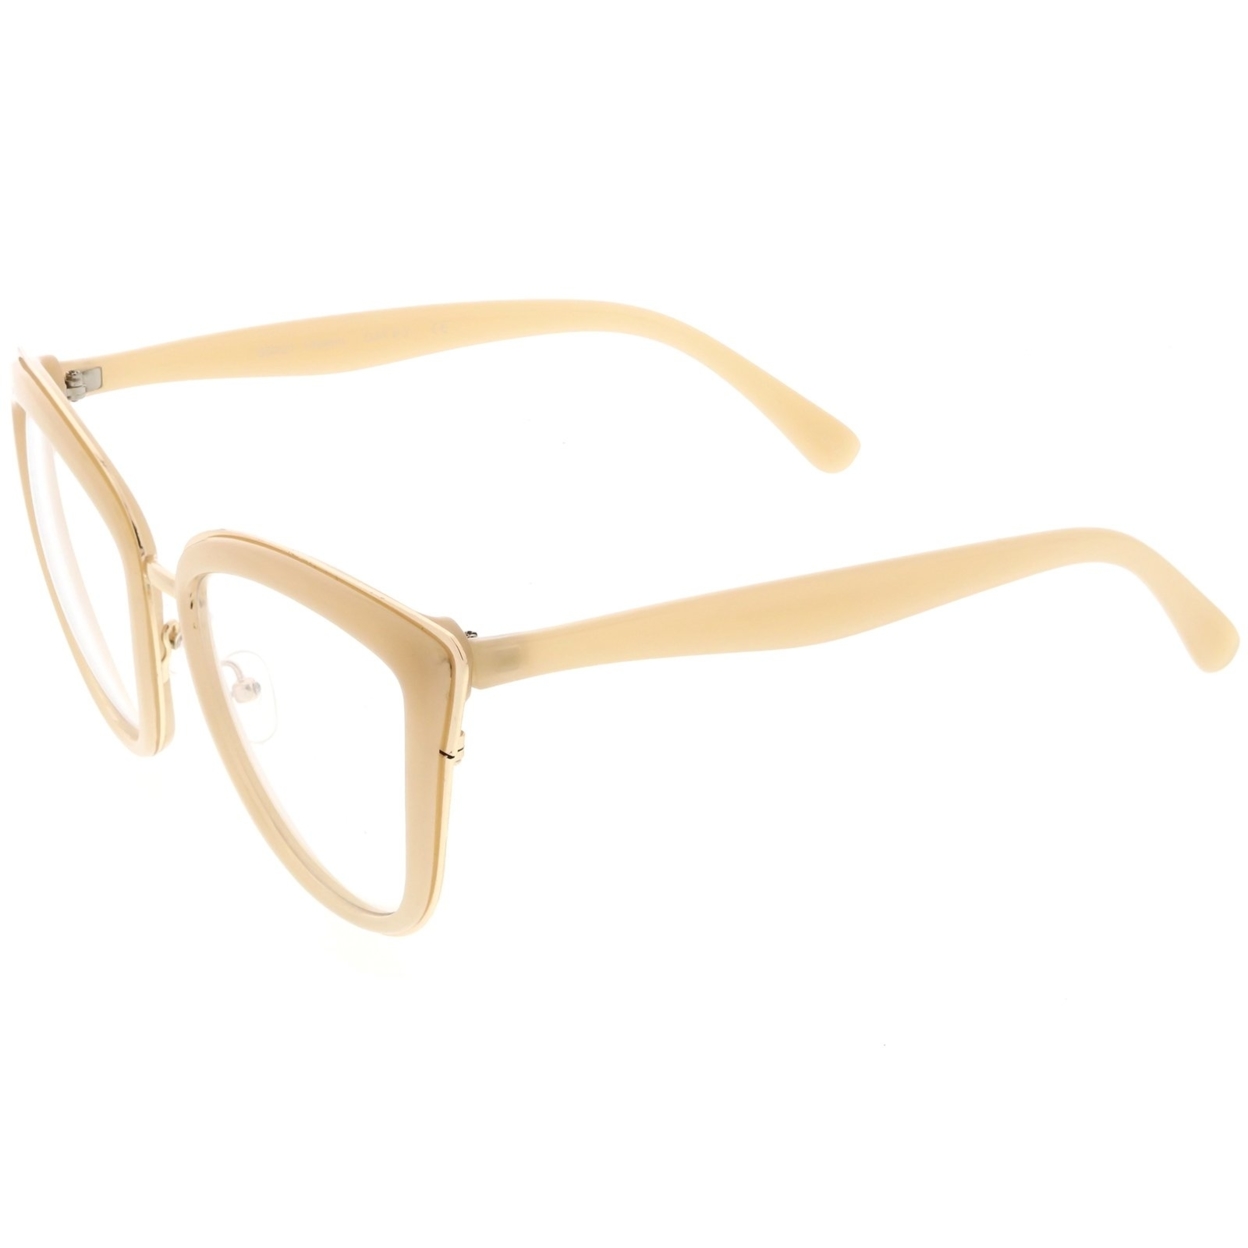 Oversize Rimmed Metal Cat Eye Glasses Clear Lens 55mm - Tortoise Gold / Clear